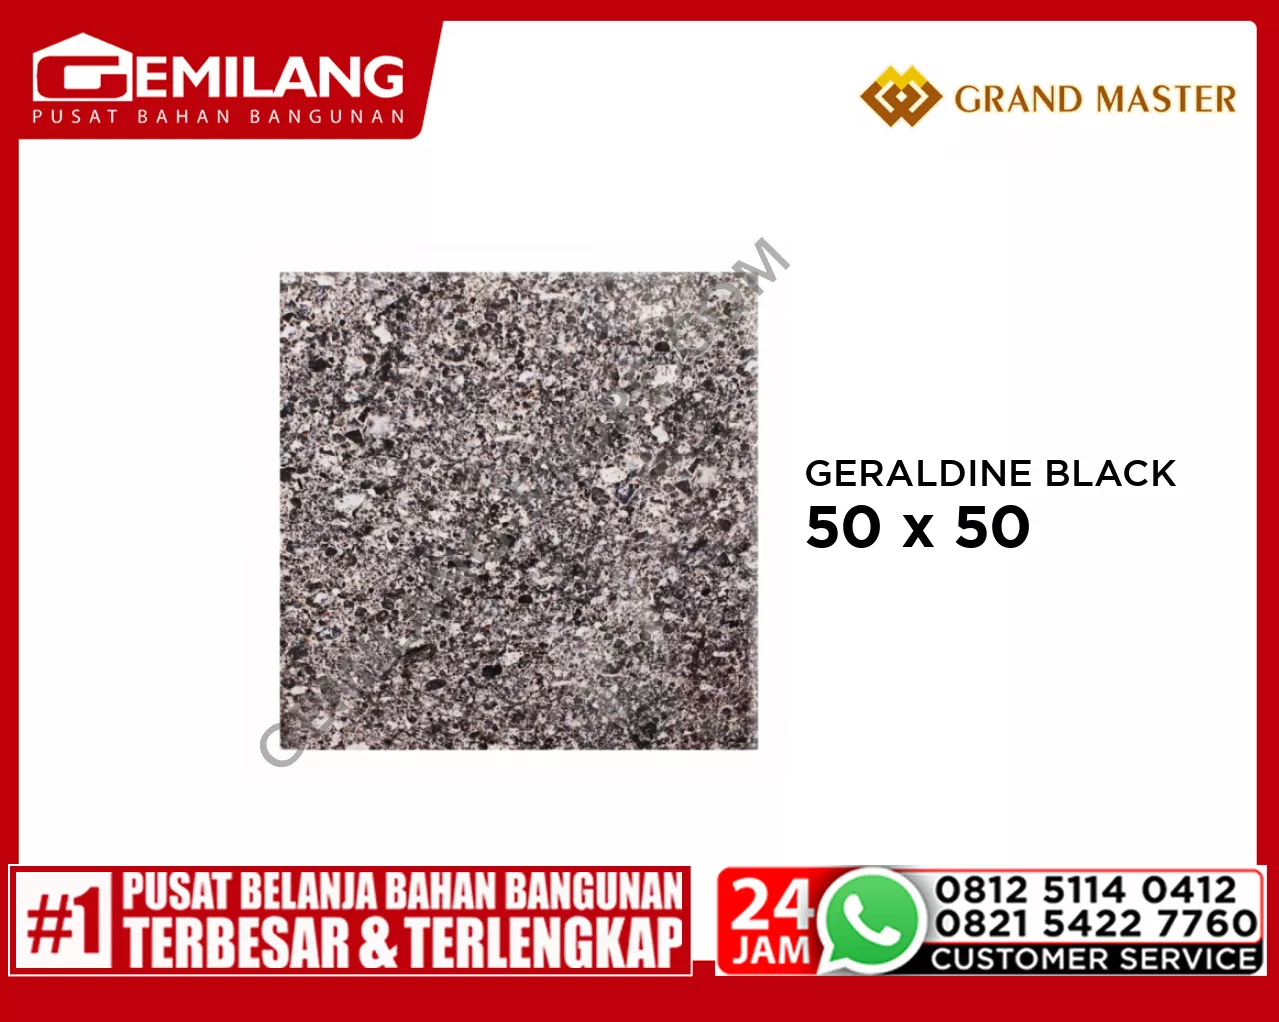 GRAND MASTER GERALDINE BLACK 50 x 50